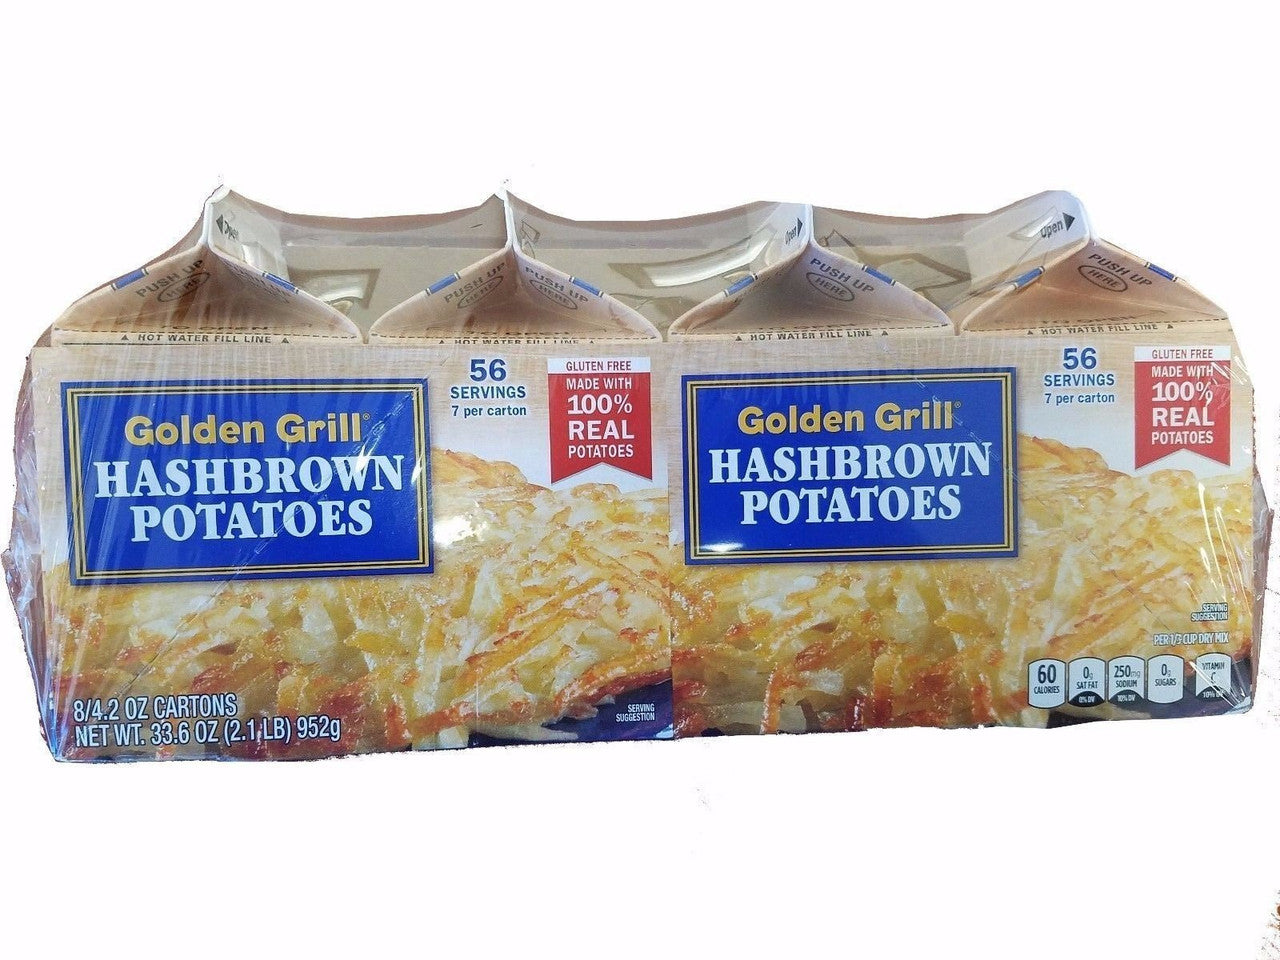 Golden Grill, Hashbrown Potatoes(56 total servings) 8ct pack, Net Wt 4.2 oz(119g) per carton, Gluten Free